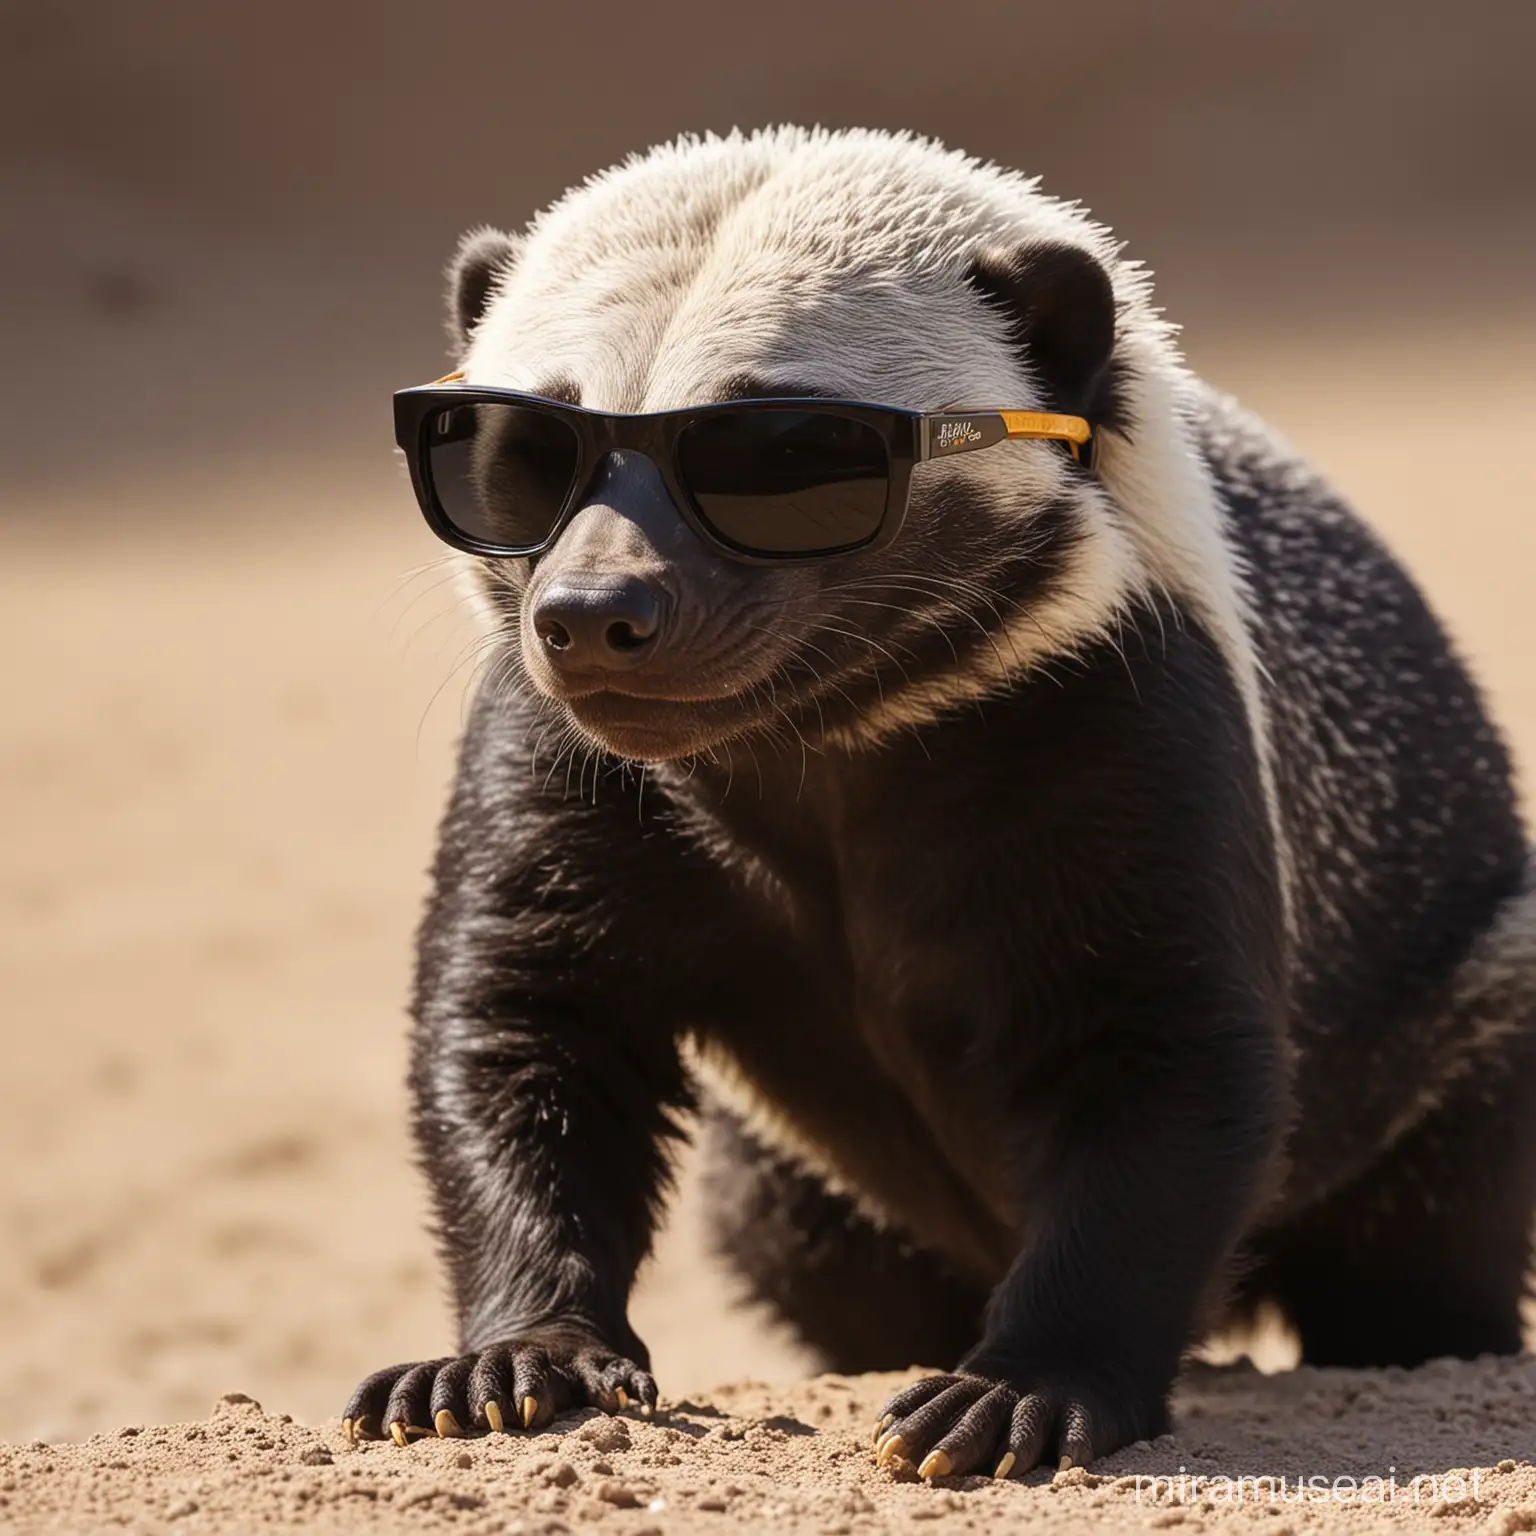 Honey badger wearing sunglasses